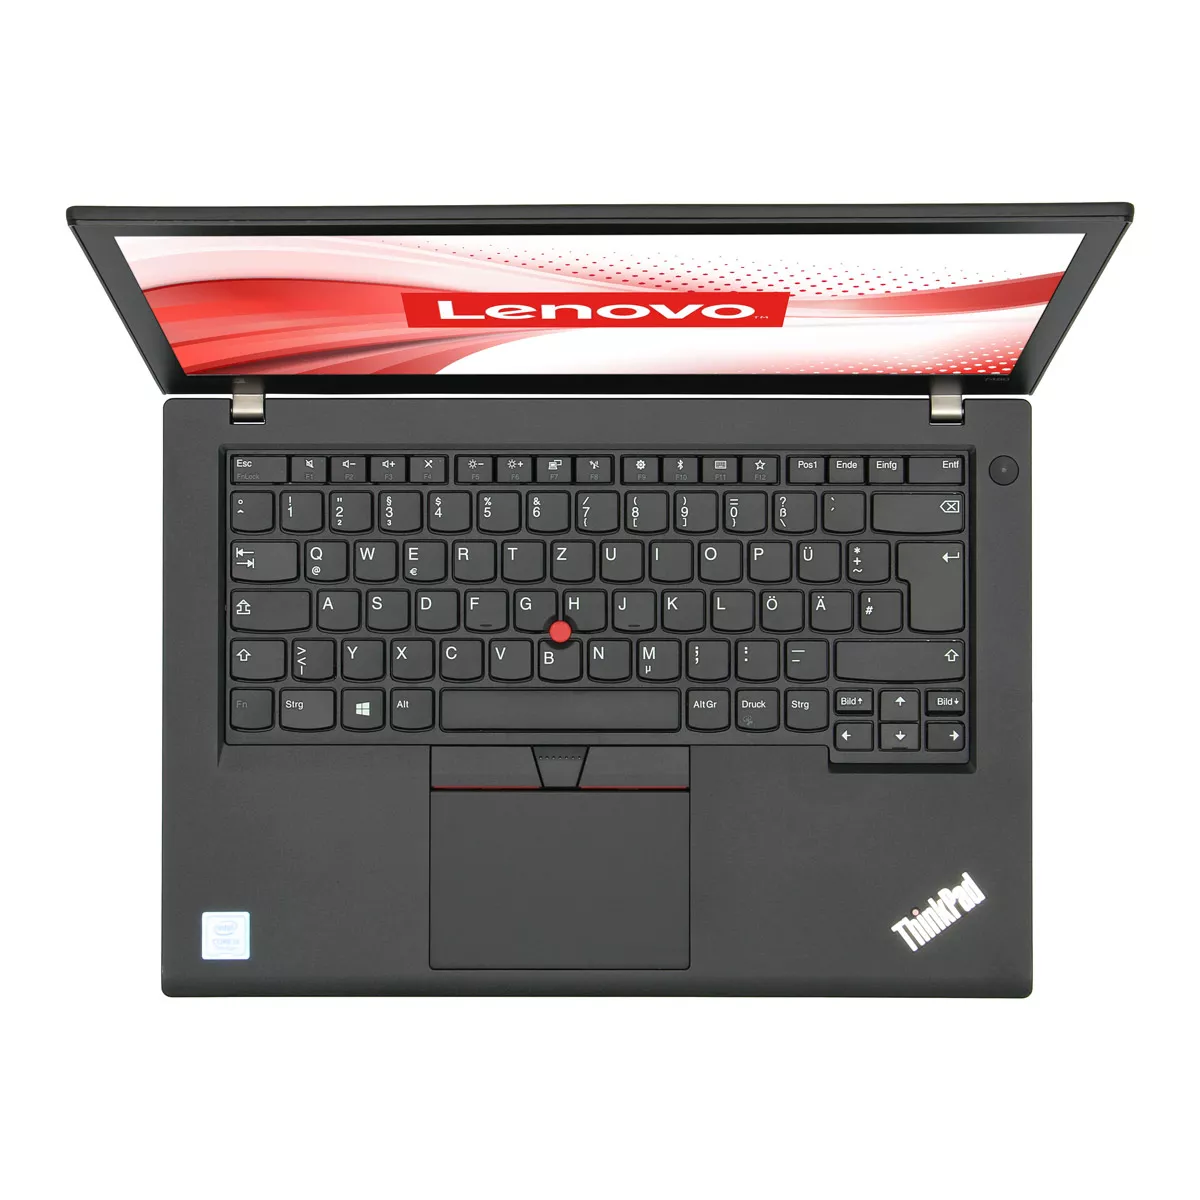 Lenovo ThinkPad T480 Core i7 8550U Full-HD 16 GB 500 GB M.2 SSD Webcam A